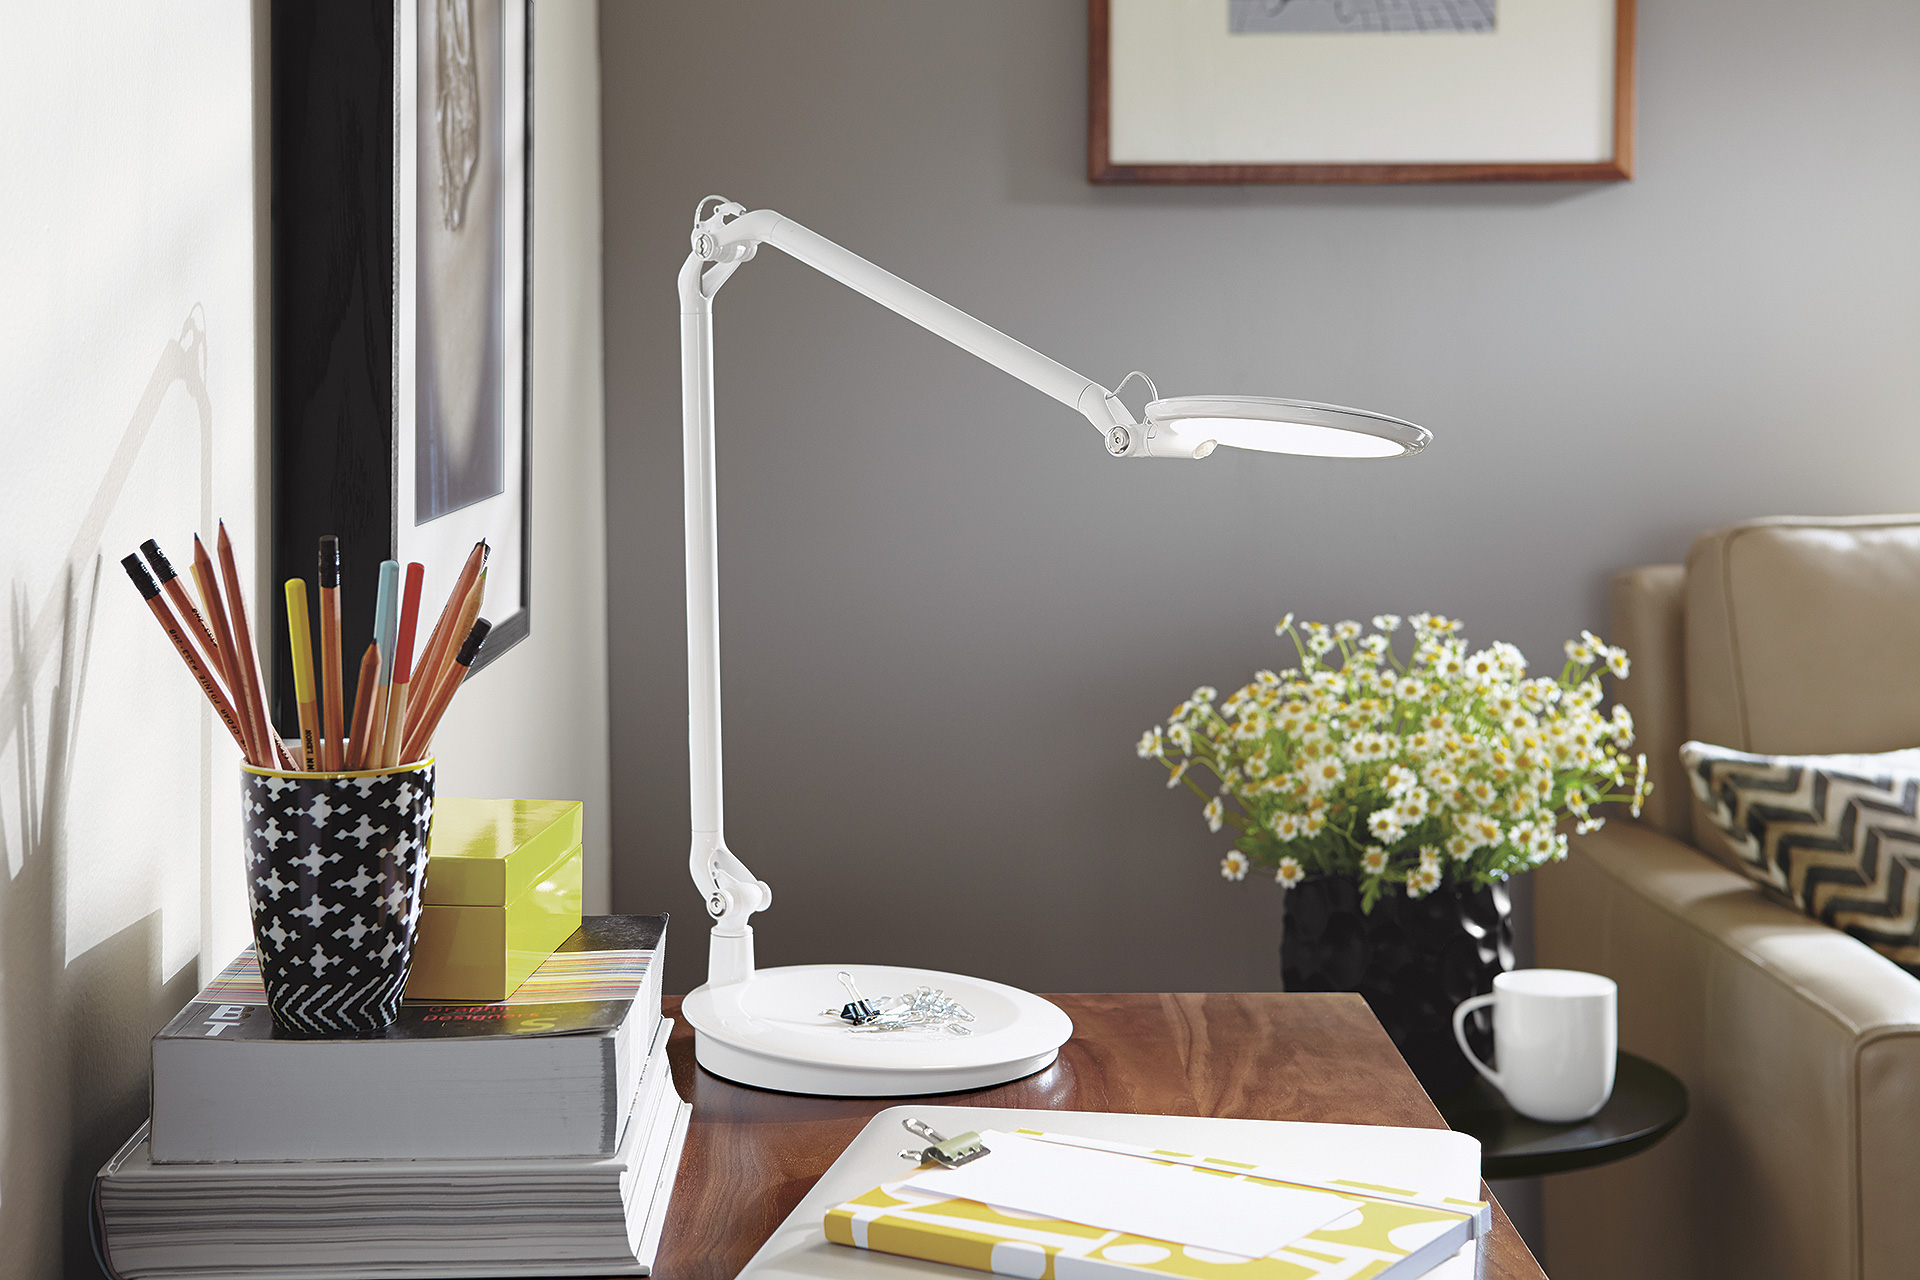 Element Disc LED lamp on desk